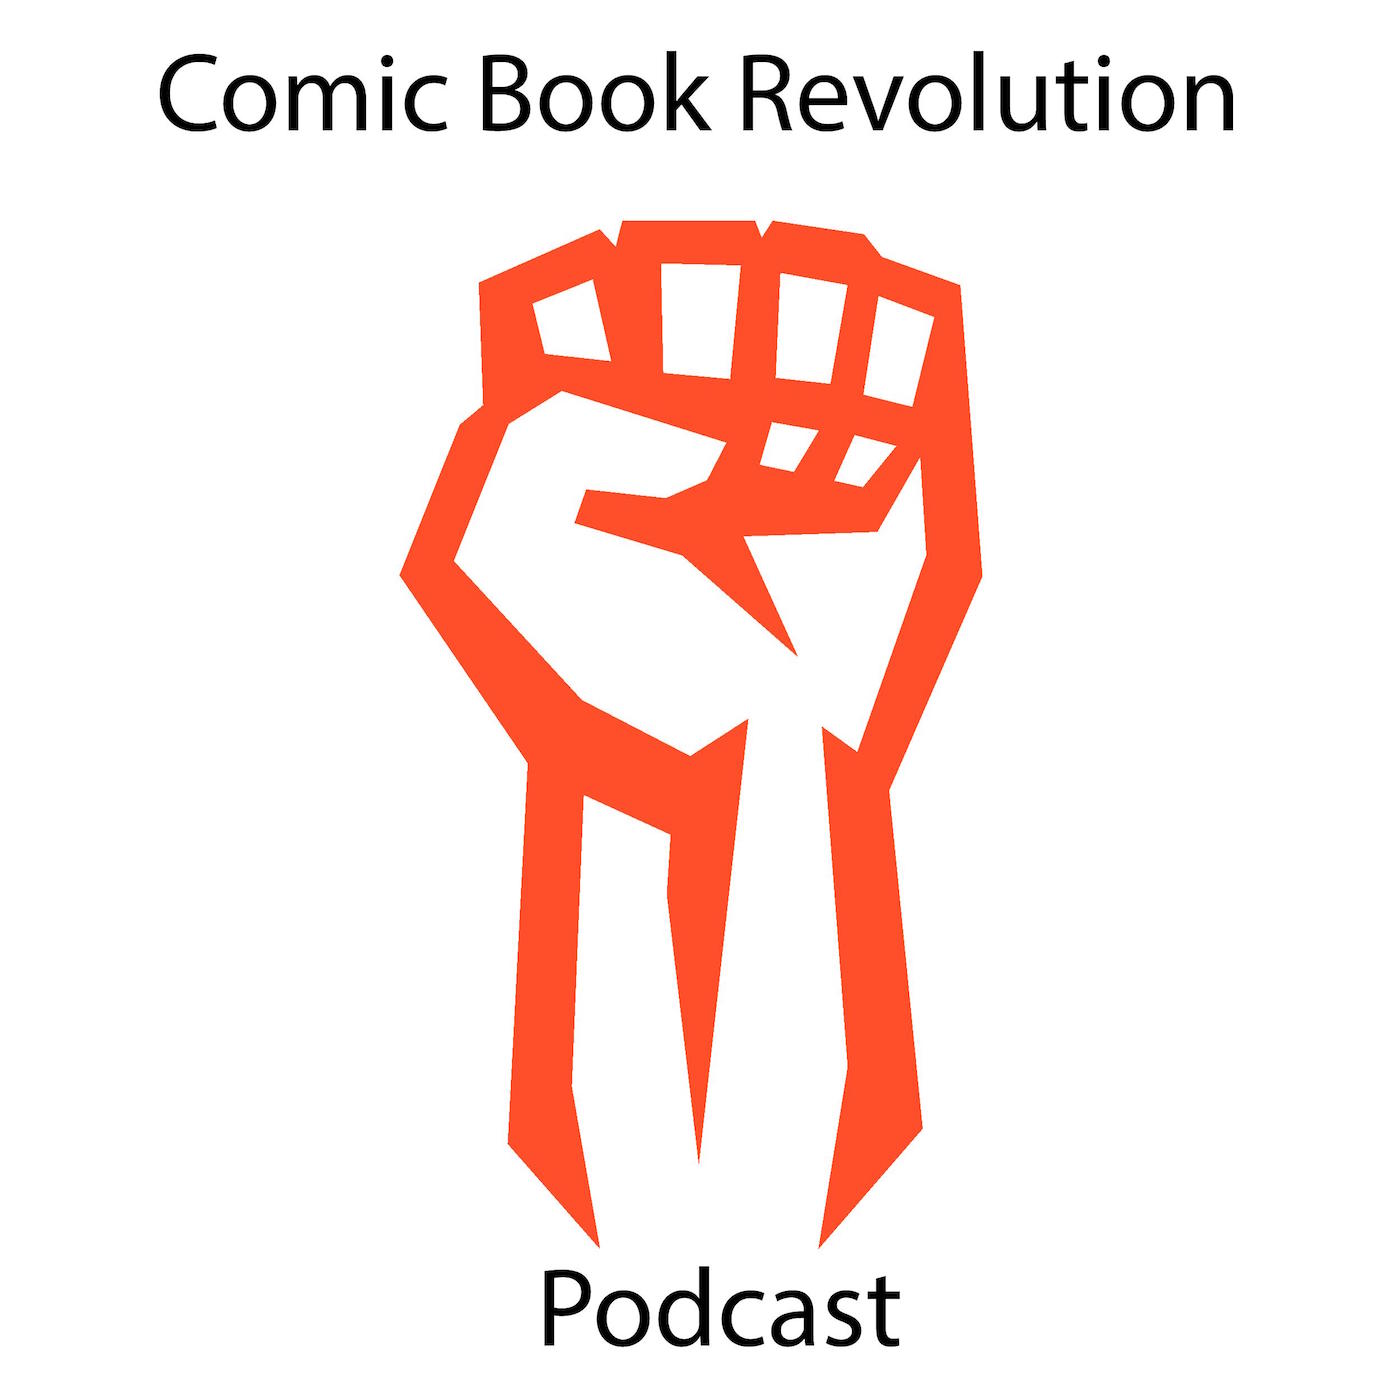 Comic Book Revolution Podcast Episode 69 - American Comics versus Manga Part 1